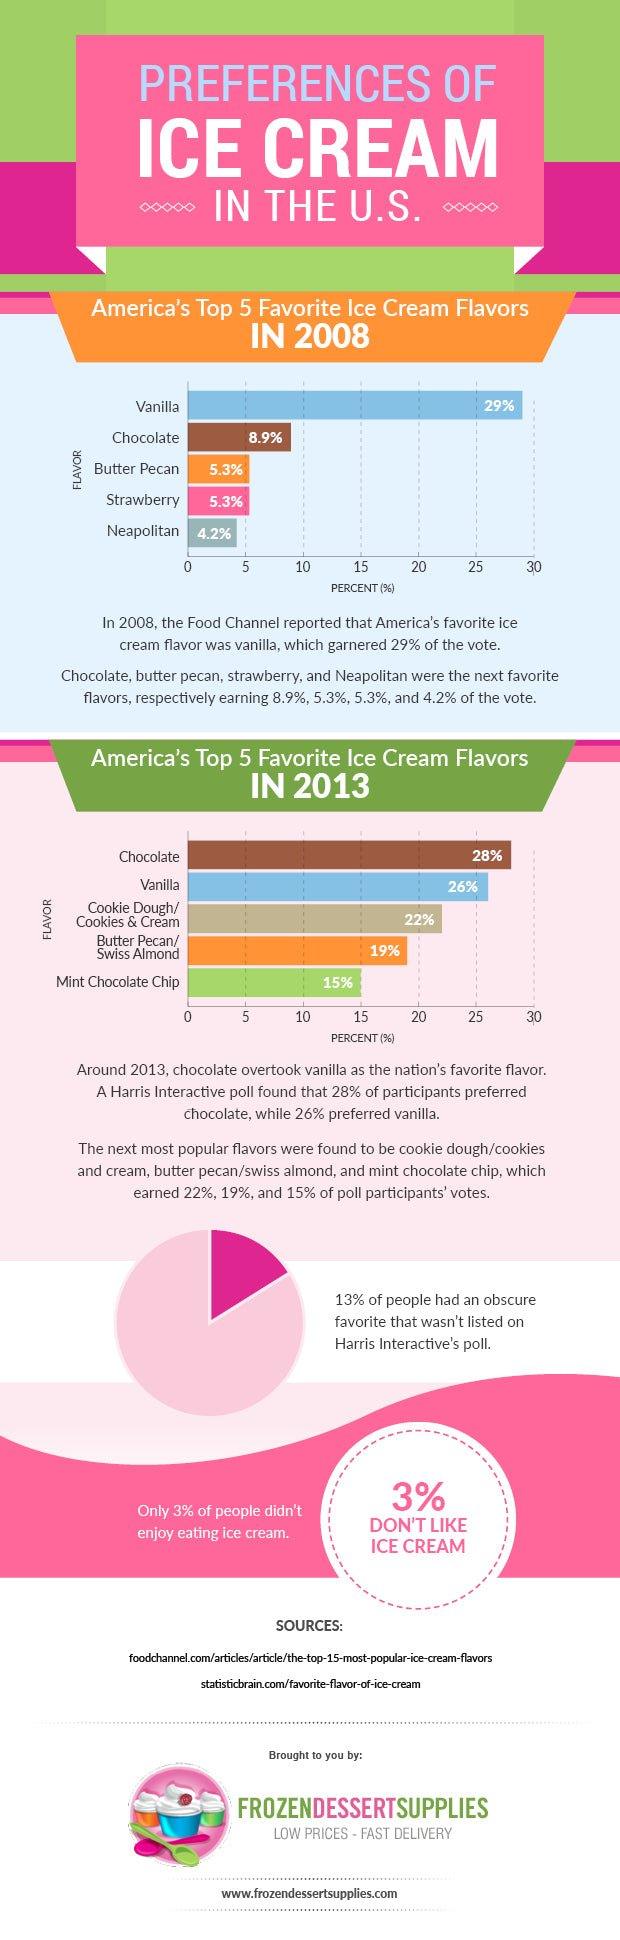 Ice Cream Preferences in the U.S. - Frozen Dessert Supplies